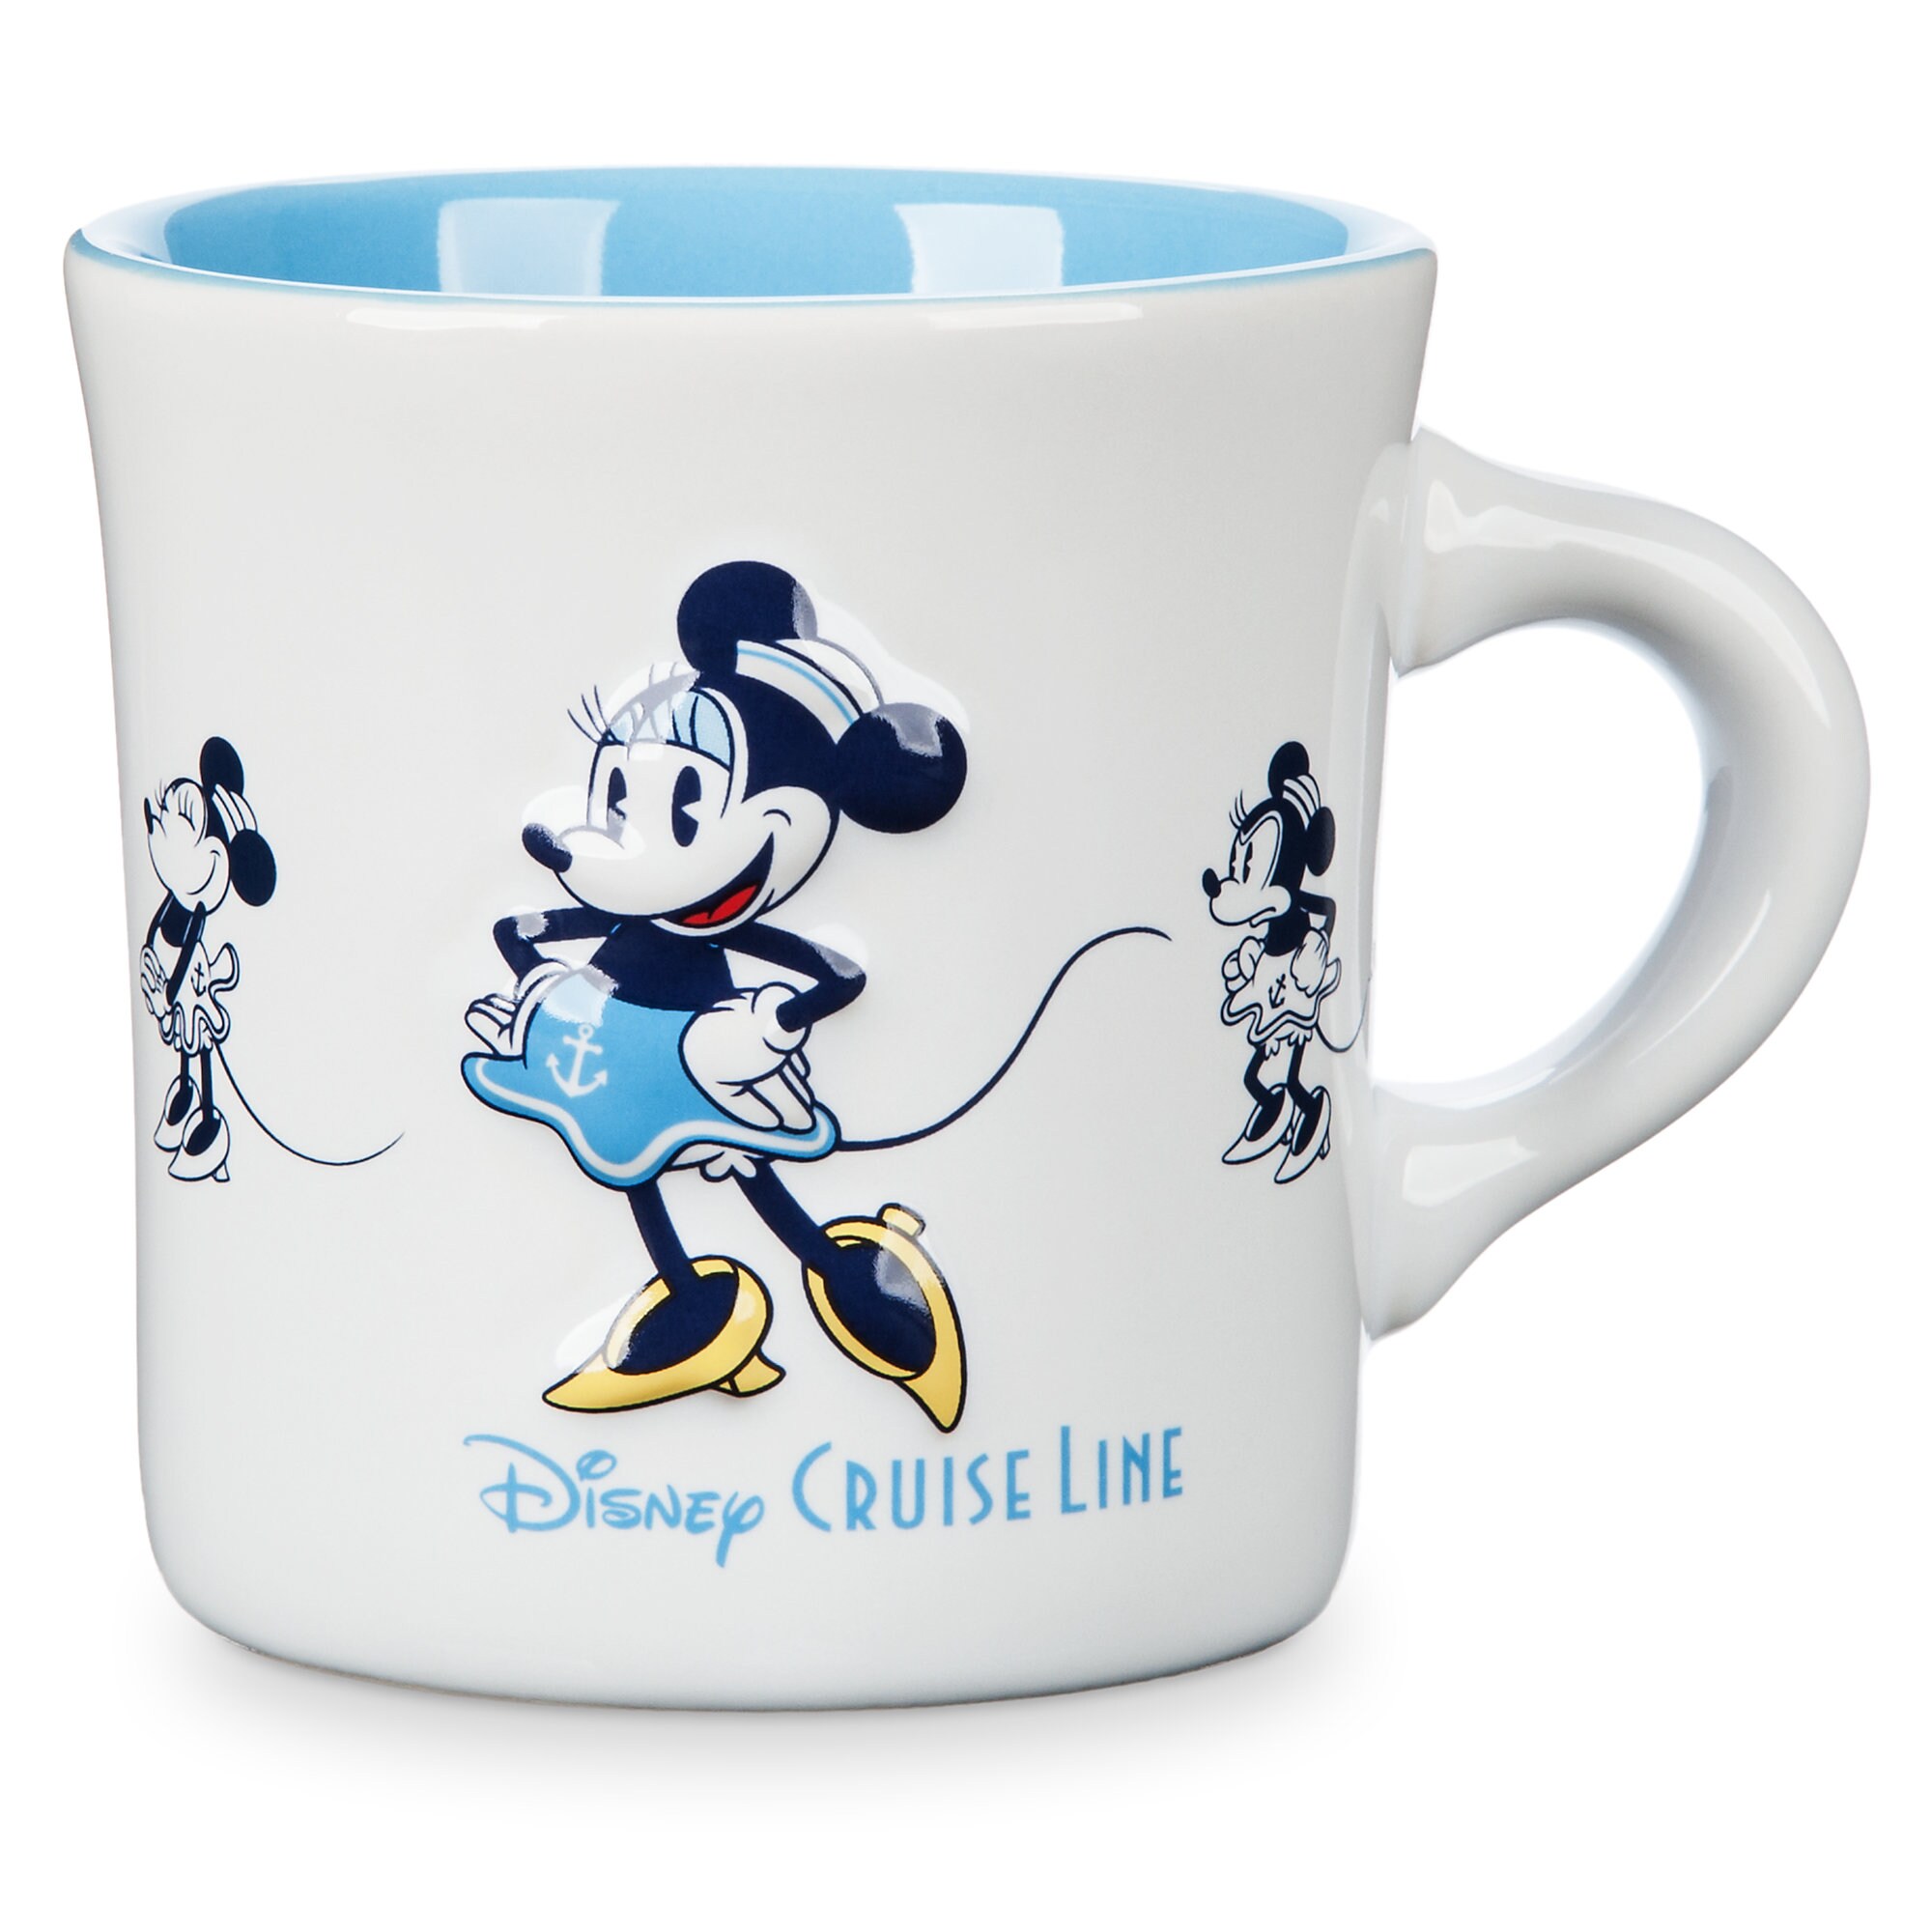 Minnie Mouse Diner Mug - Disney Cruise Line